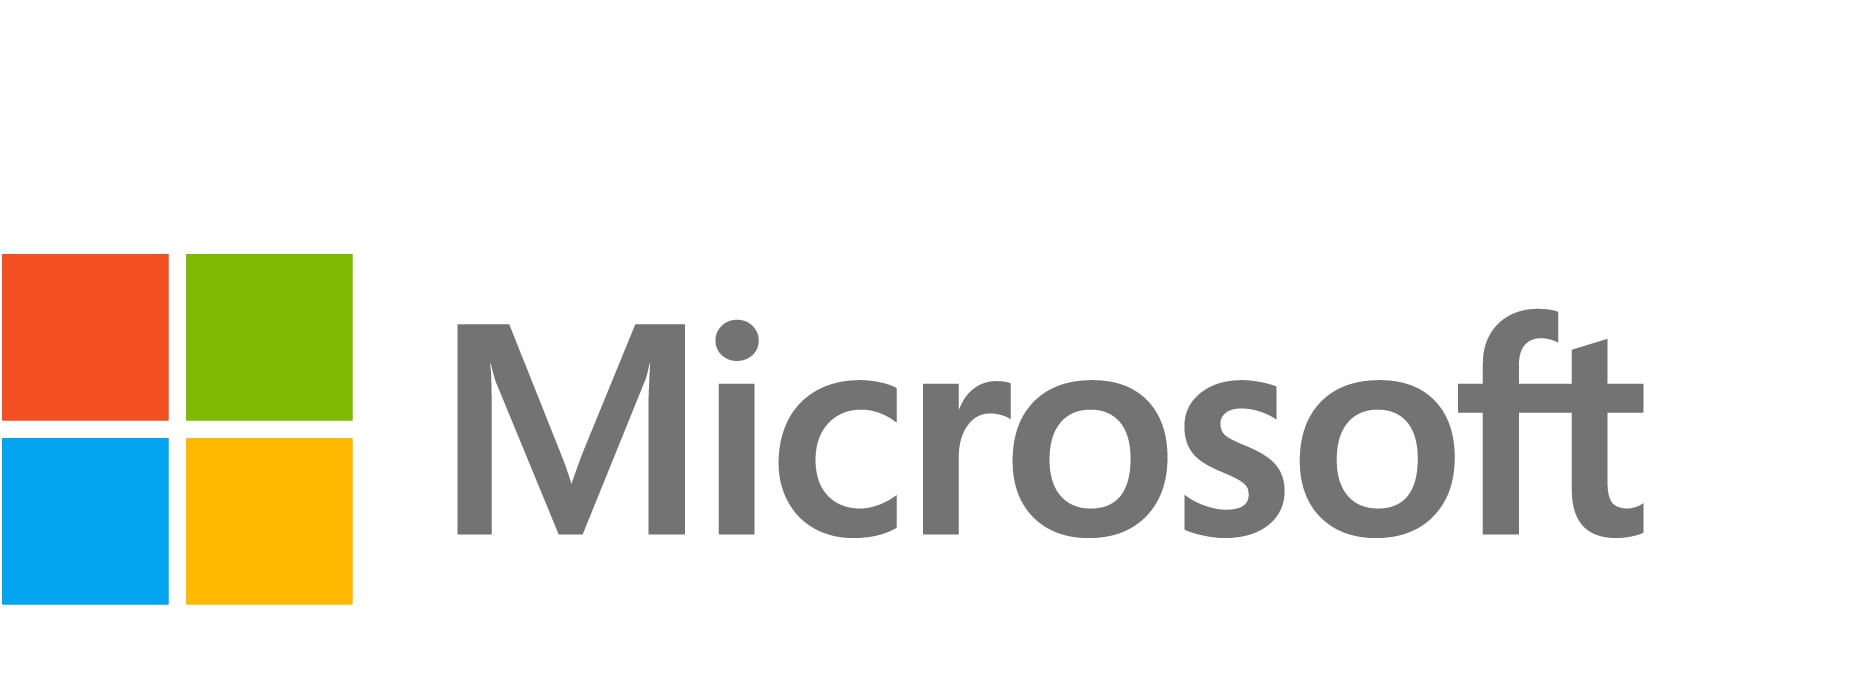 Microsoft Office SharePoint Server - license & software assurance - 1 server